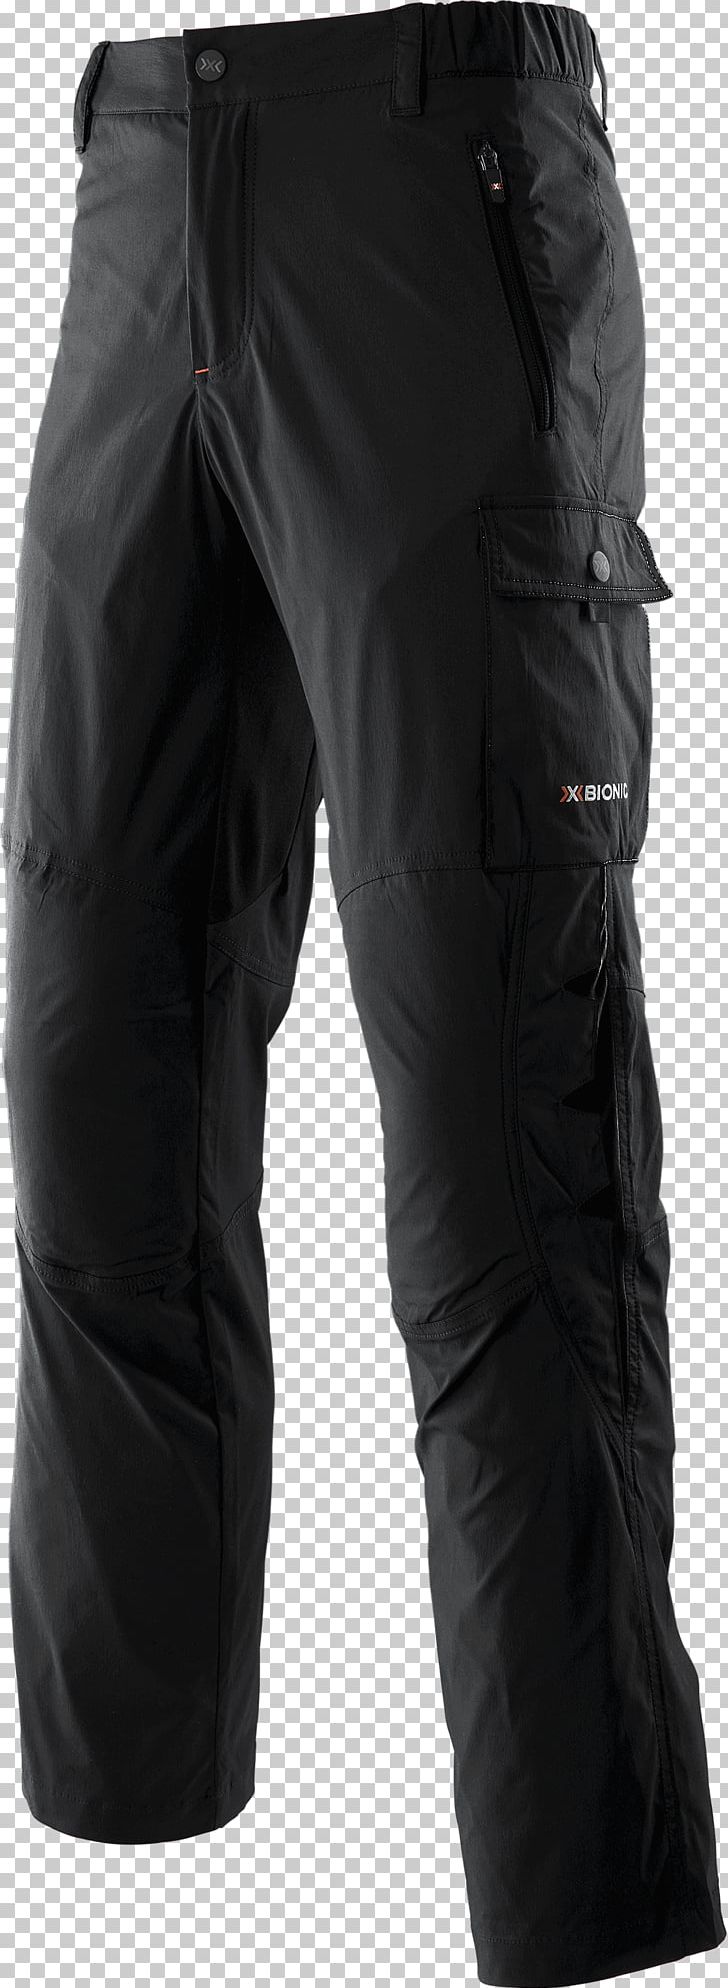 Cargo Pants Clothing Jacket Shorts PNG, Clipart, Active Pants, Bionic ...